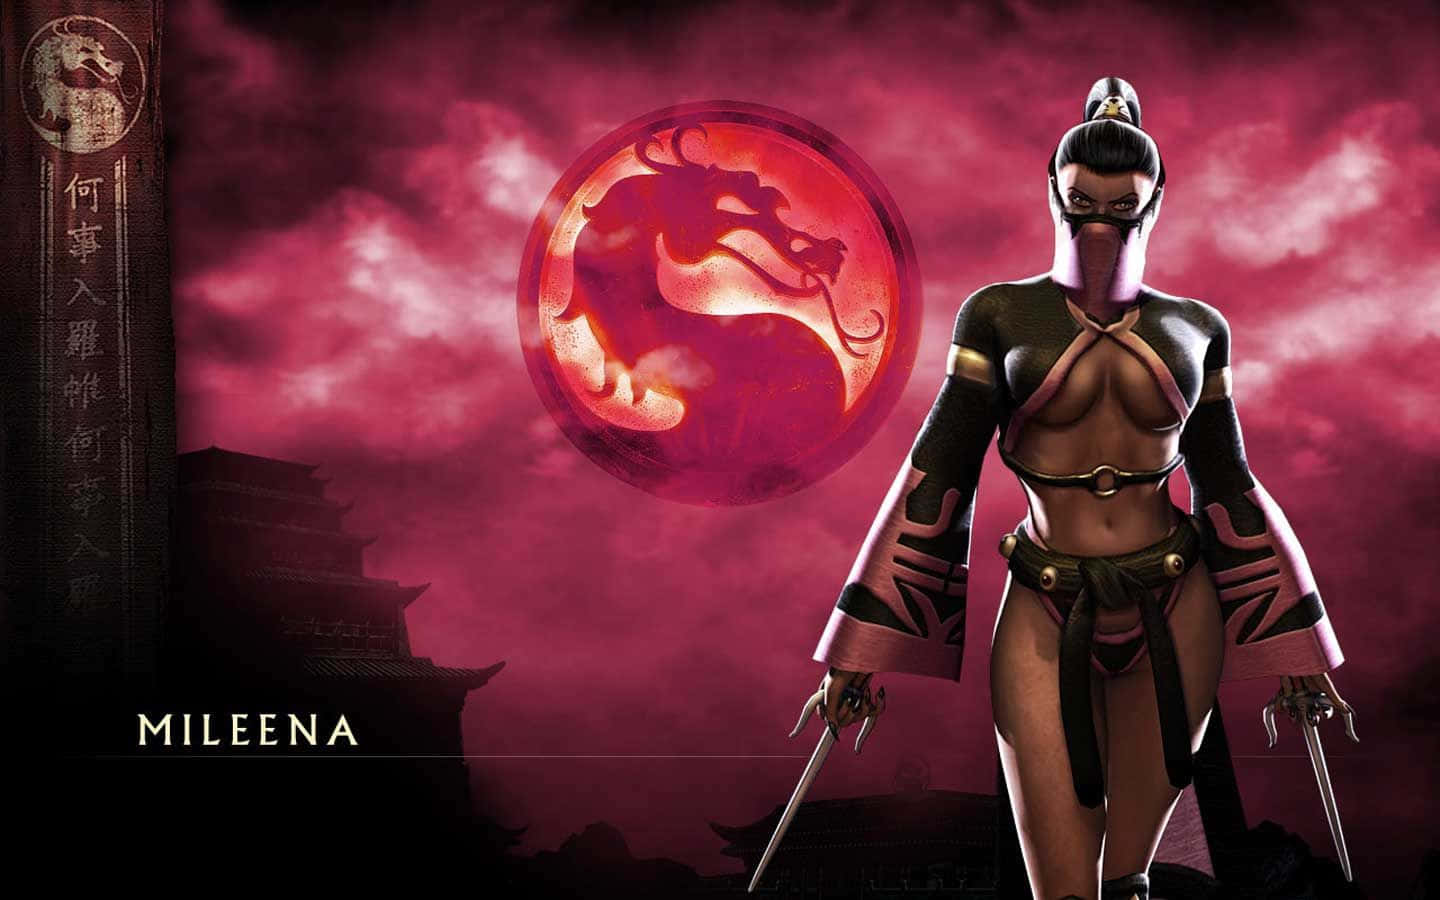 Mileena, the vicious assassin in action in Mortal Kombat Wallpaper